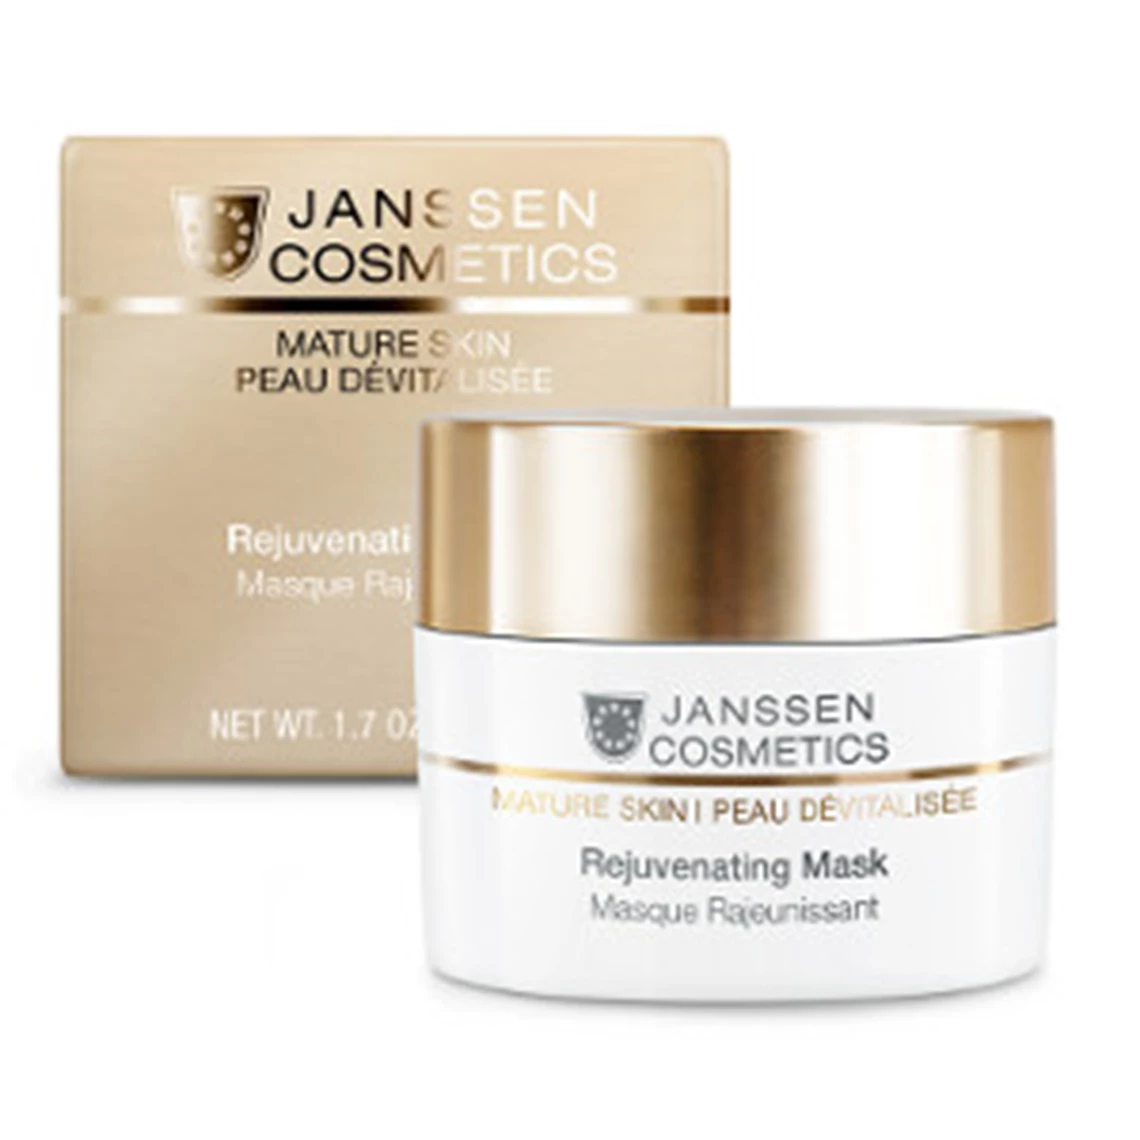 Rejuvenating Mask by Janssen Cosmetics